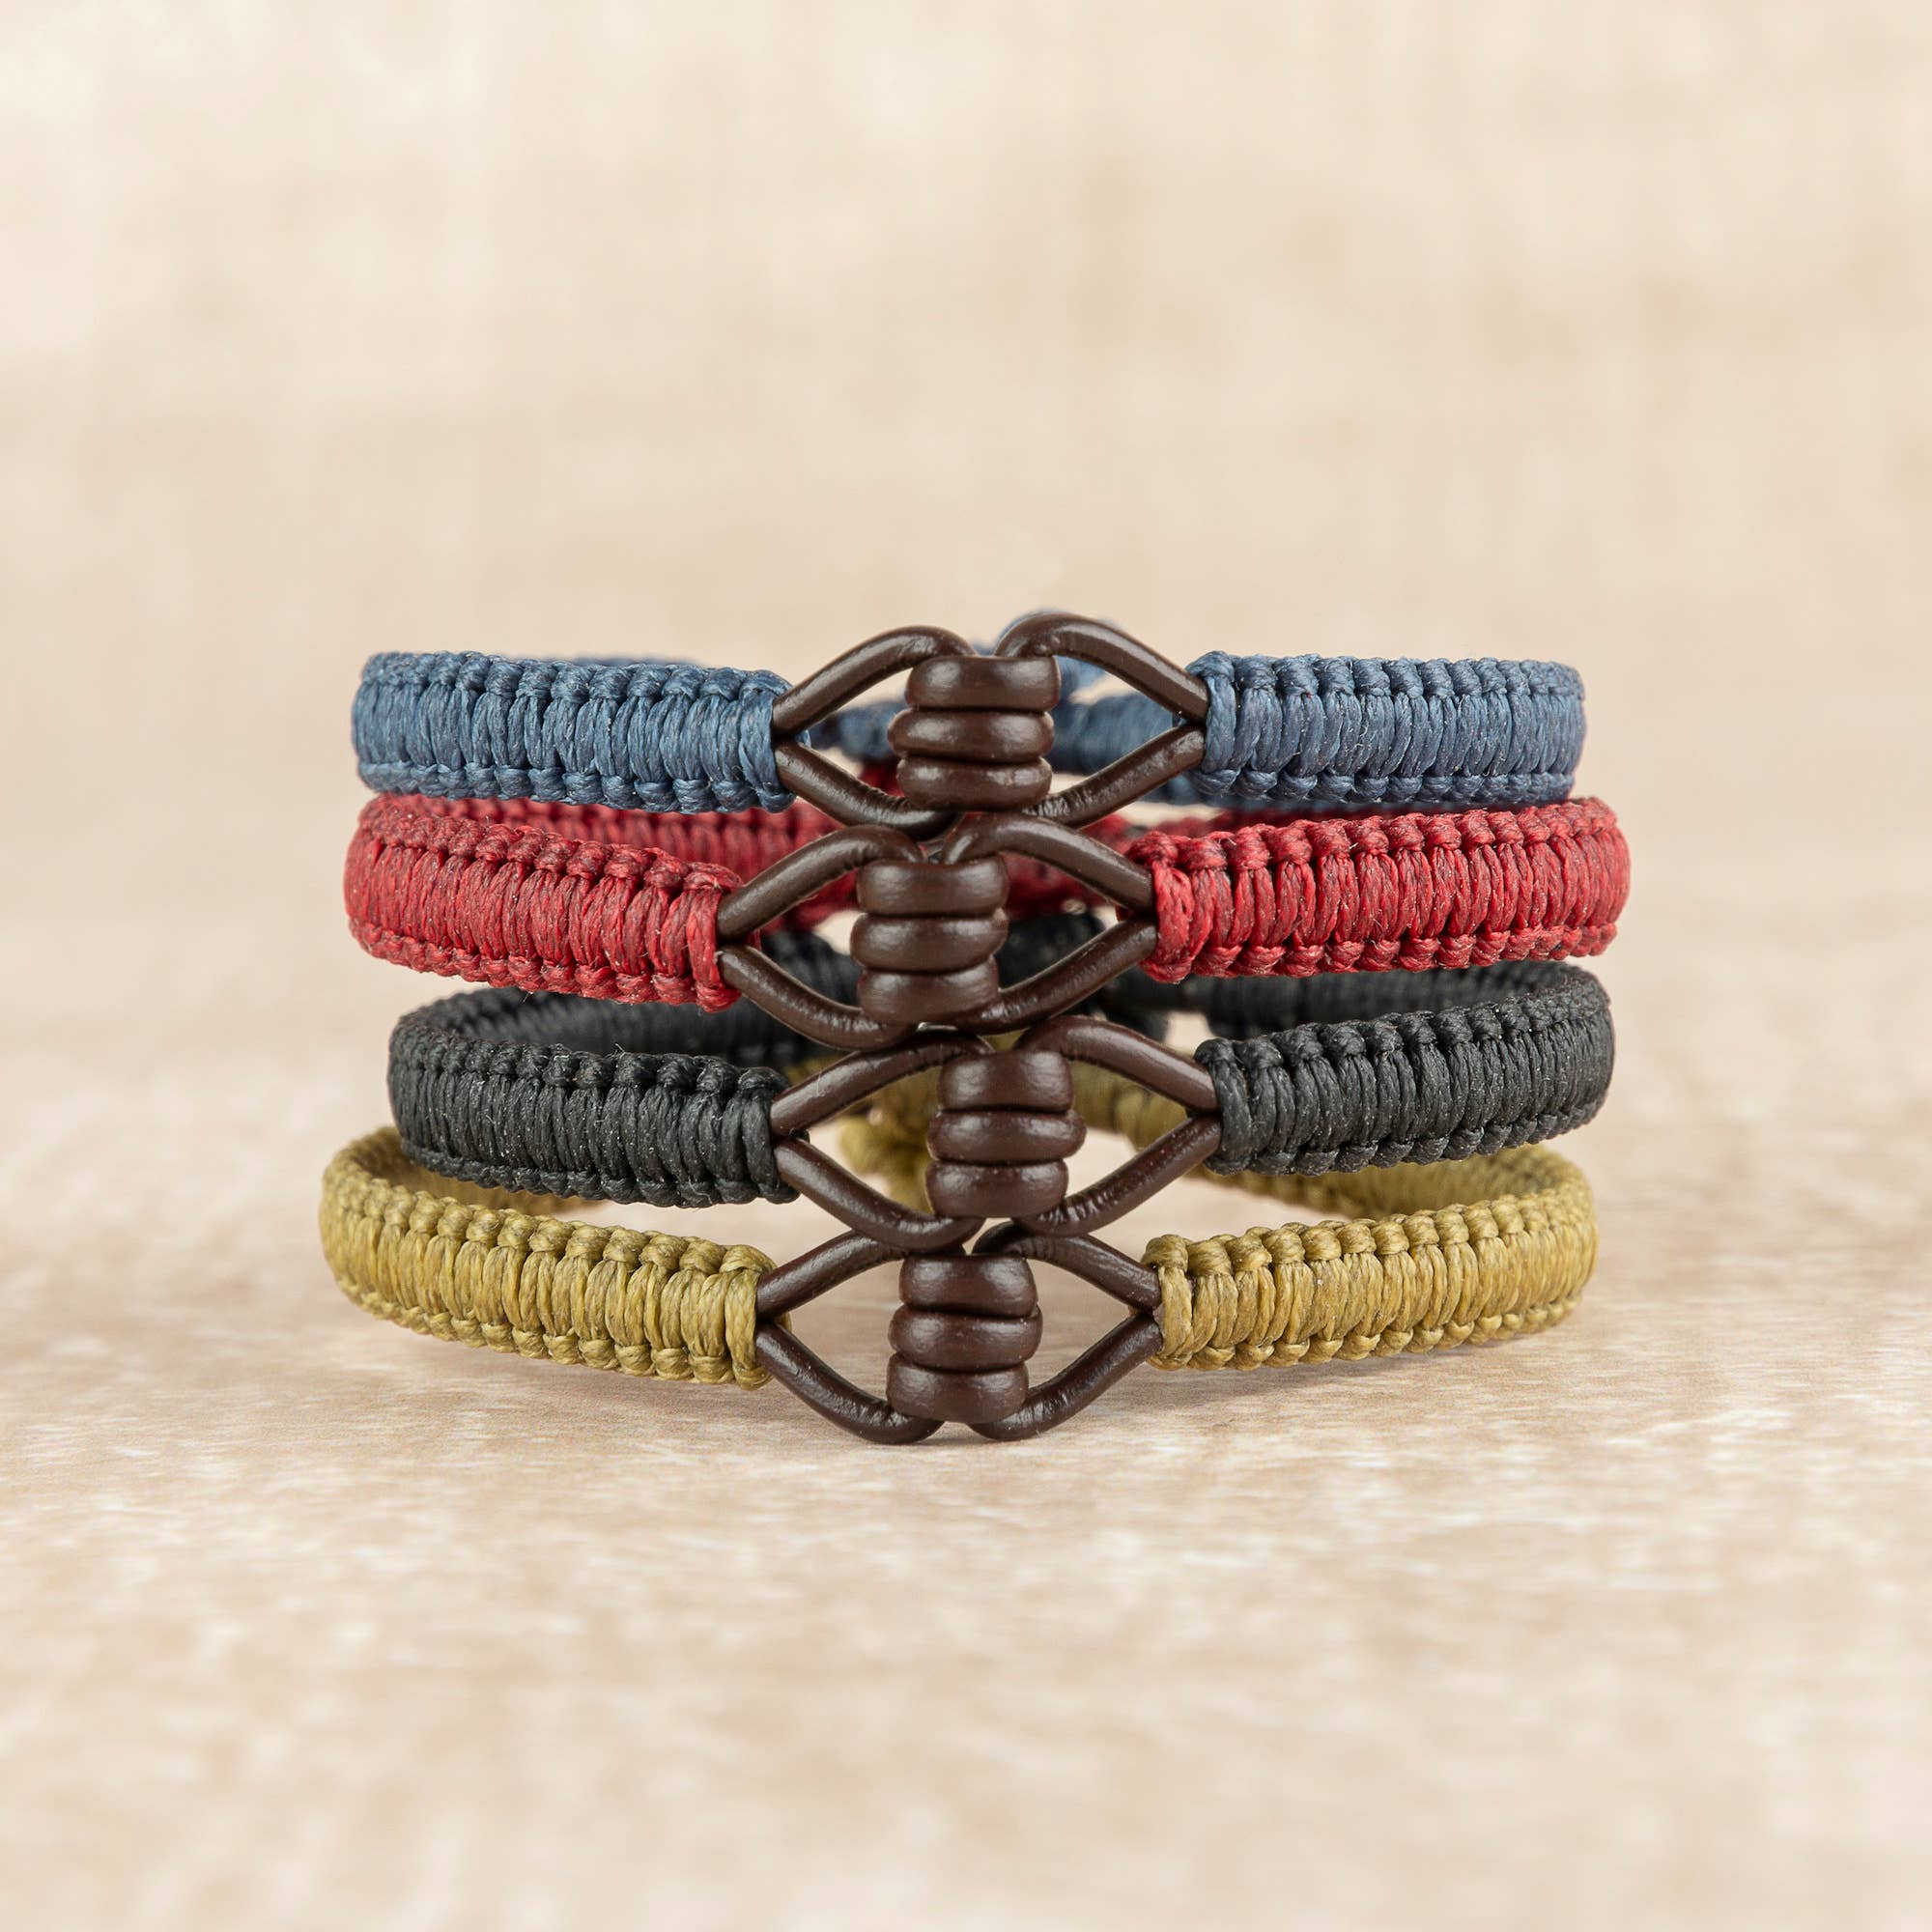 2 Woven Colourful Fabric Handmade Cotton Thread String Kids Friendship  Bracelets | eBay